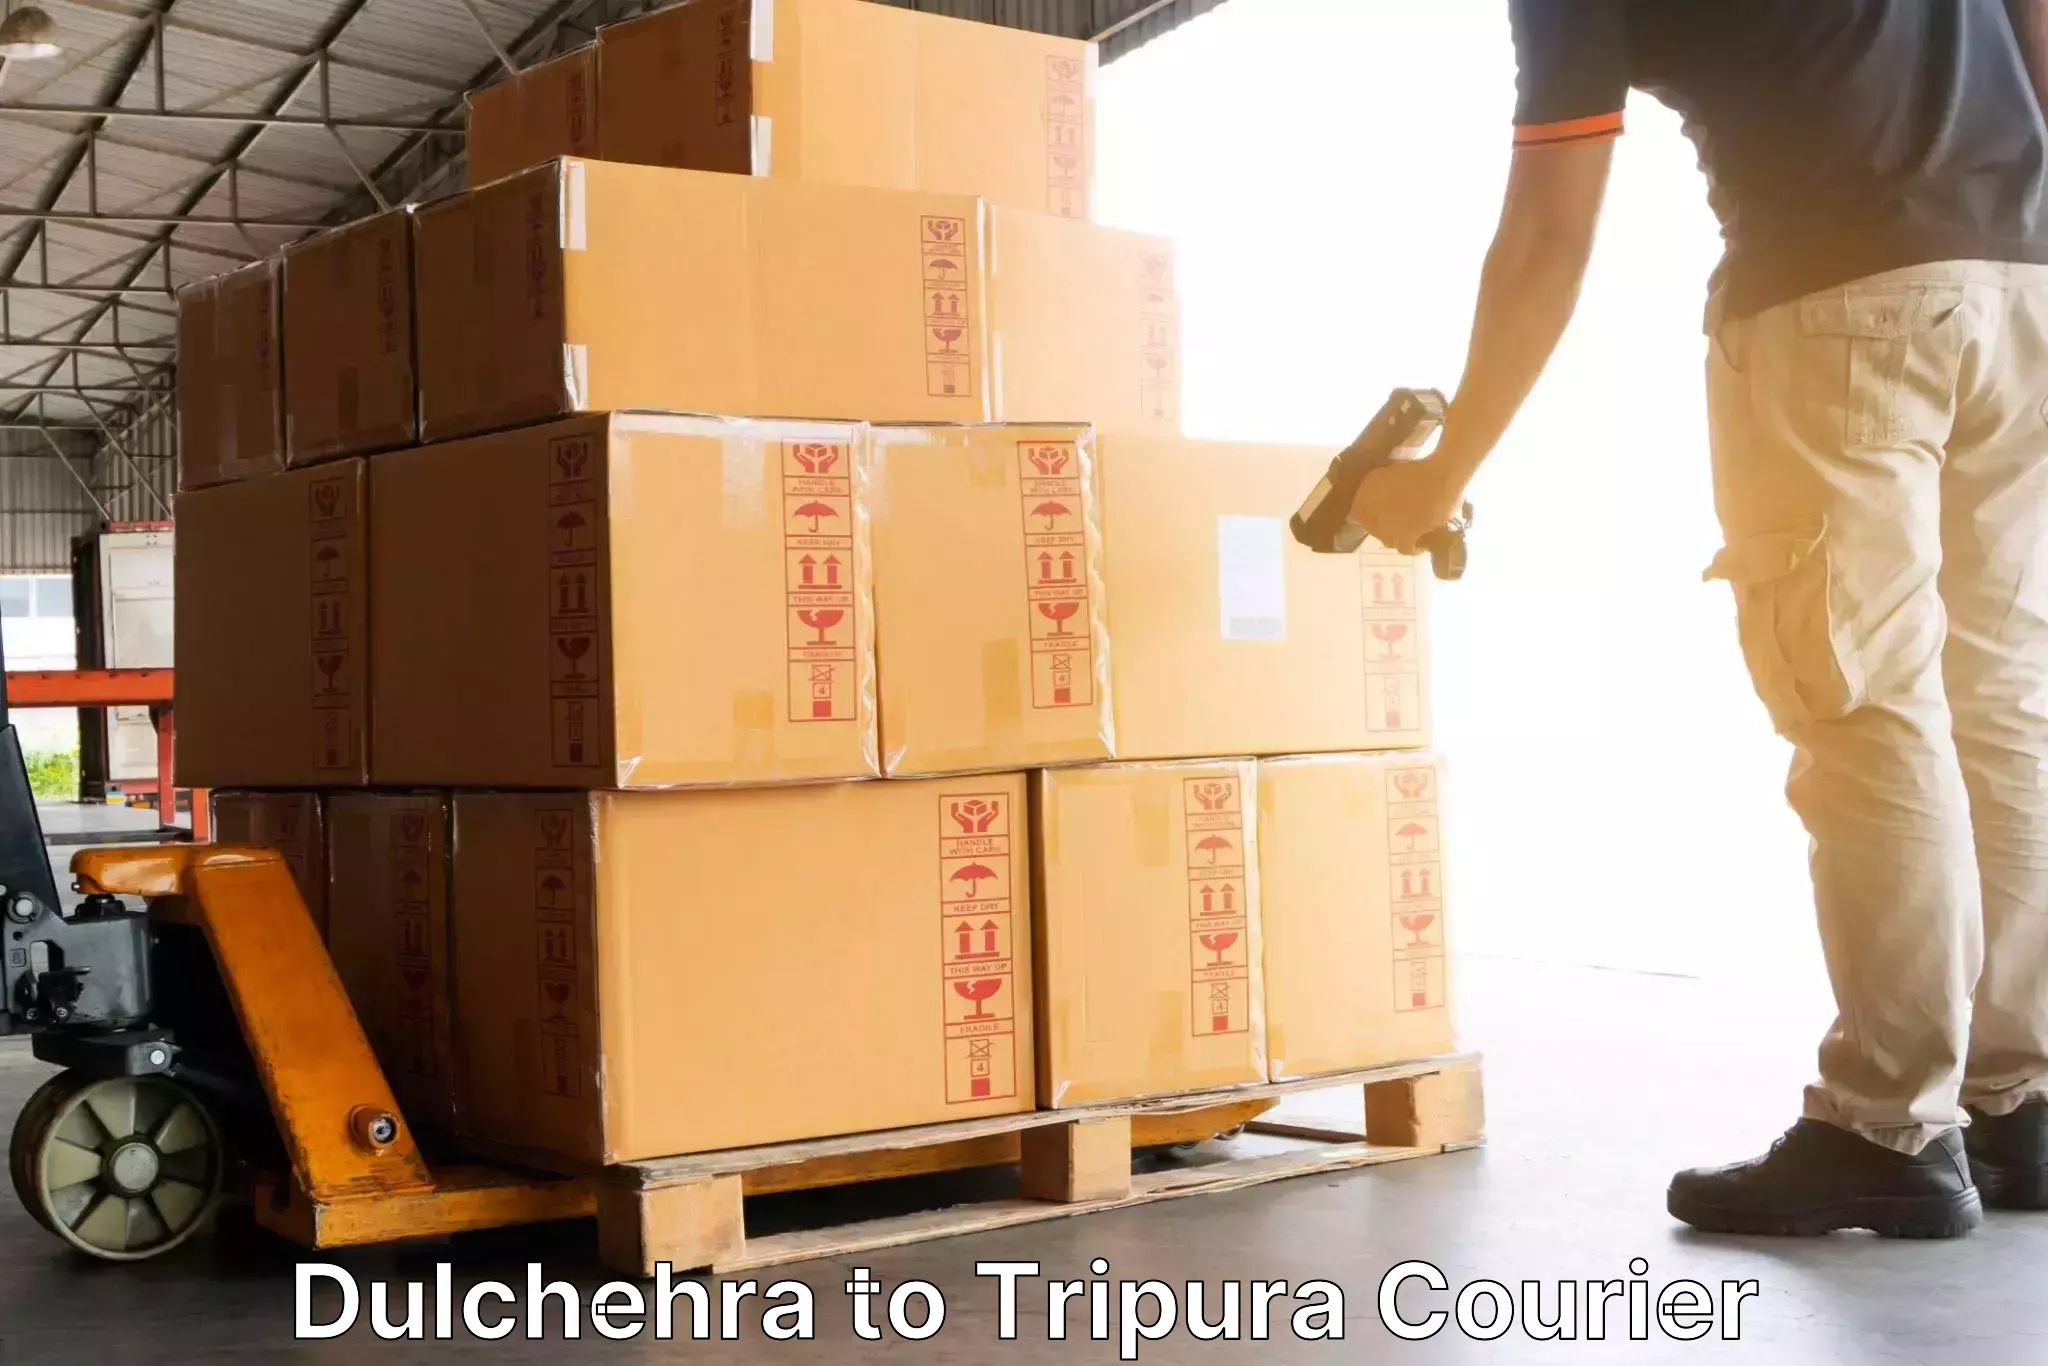 Multi-service courier options Dulchehra to Tripura